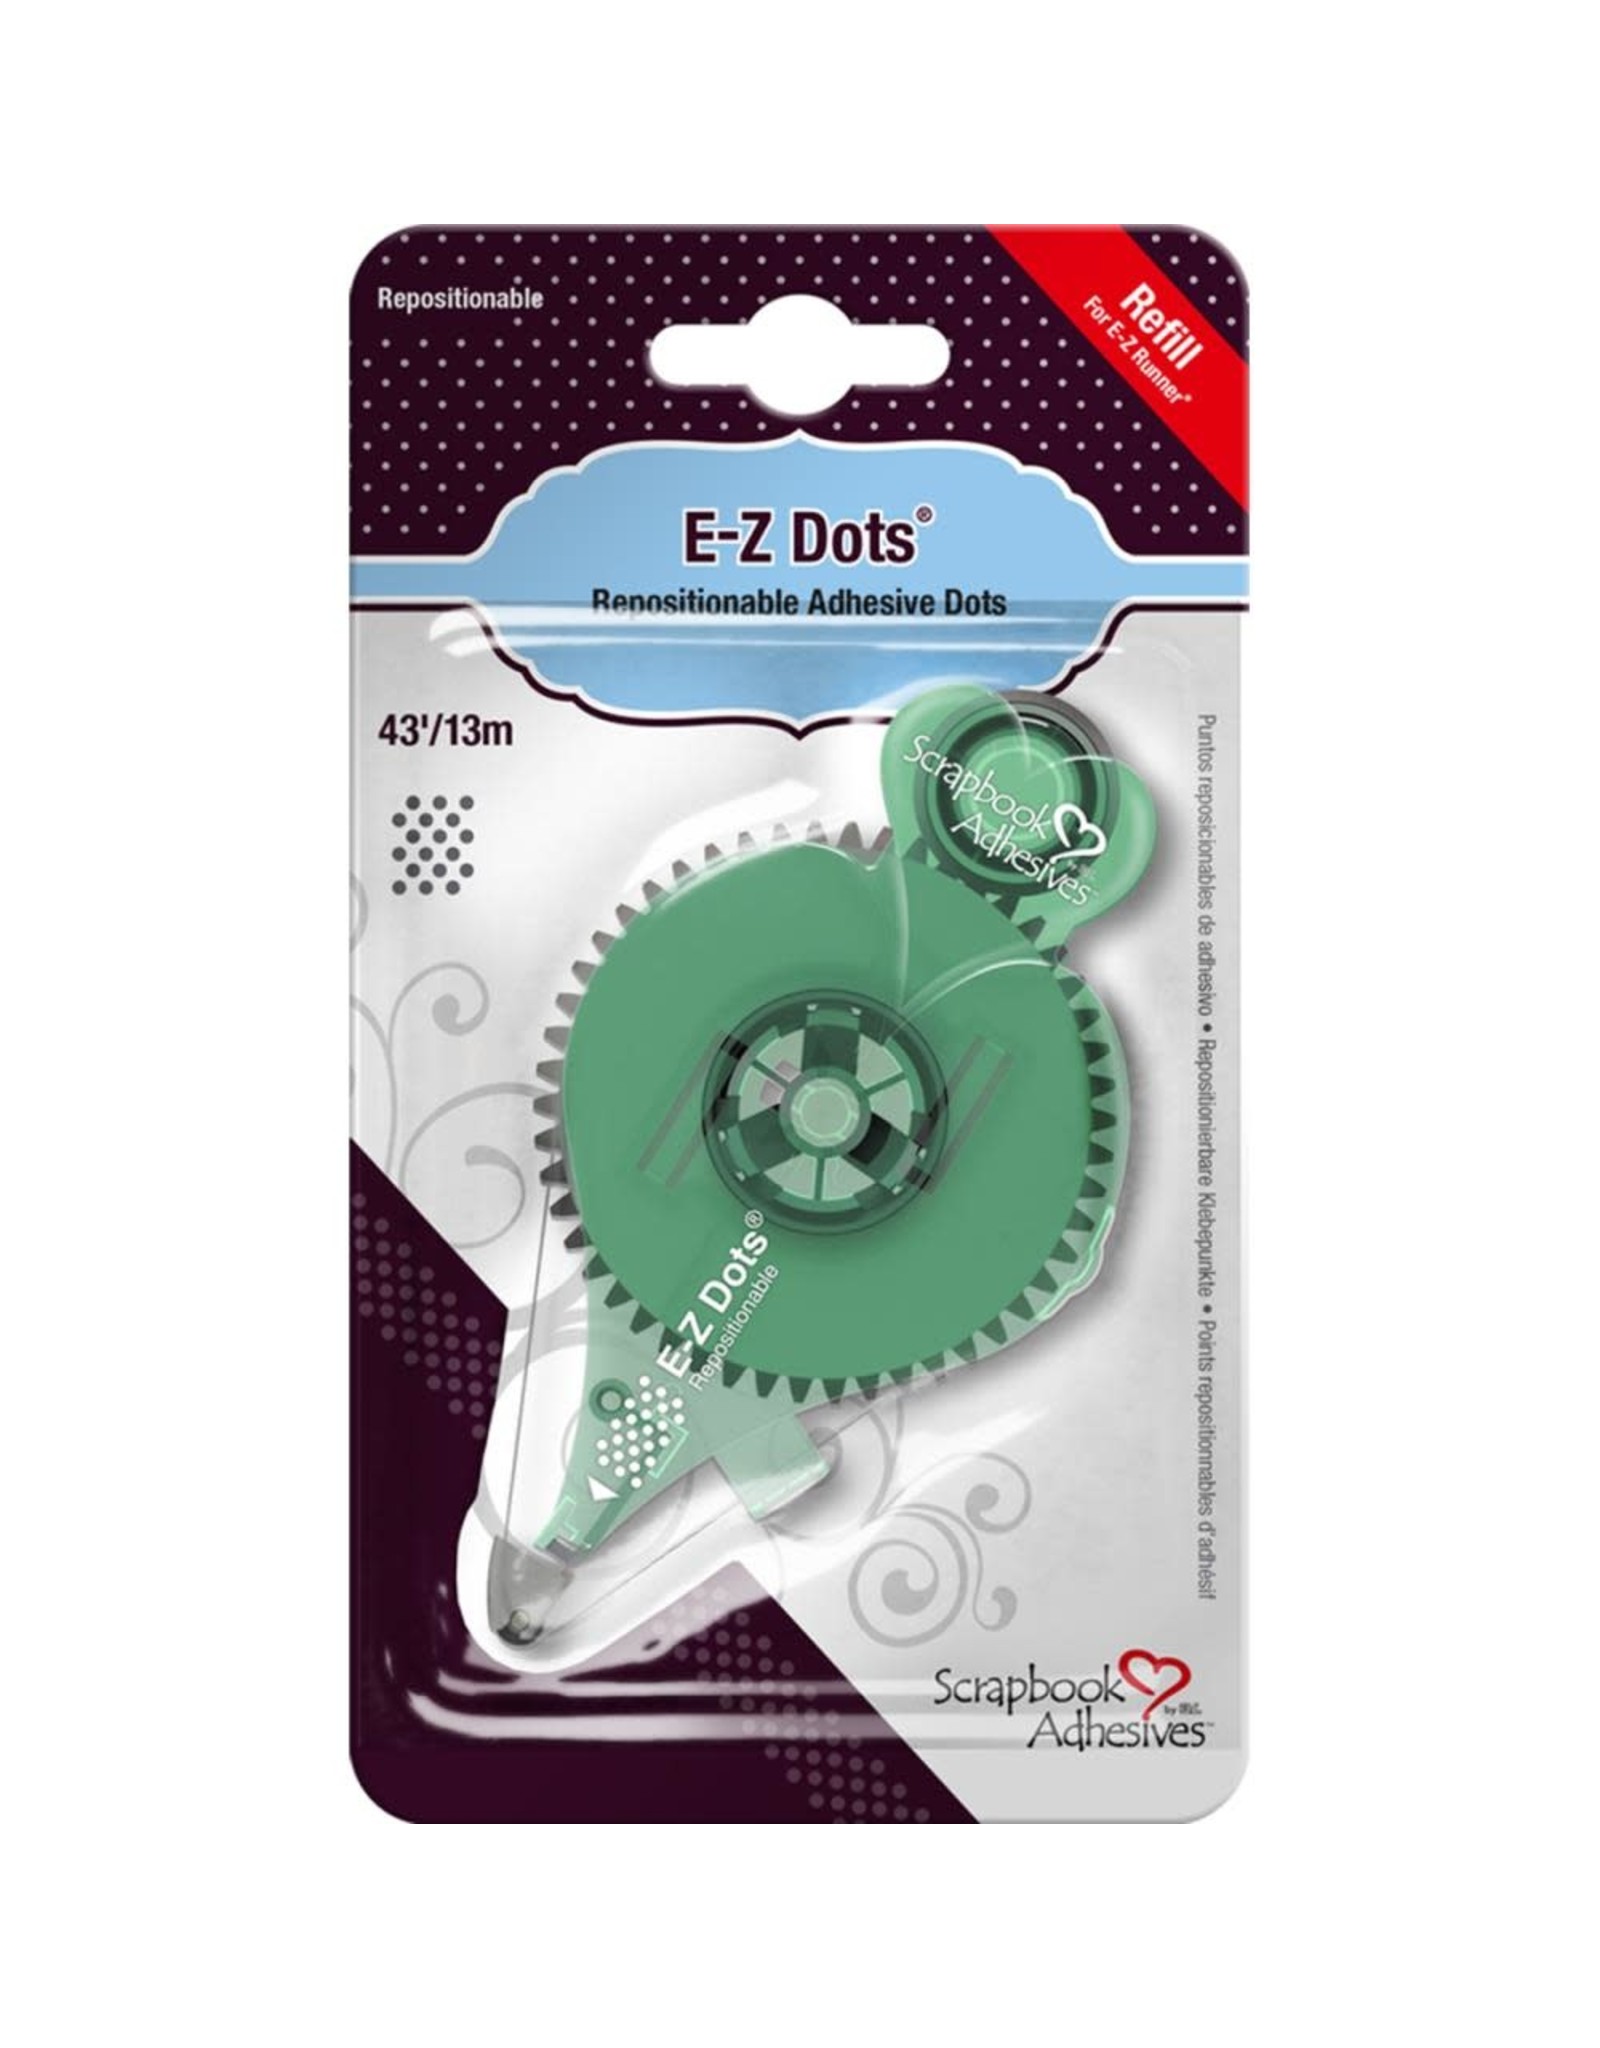 Scrapbook Adhesives E-Z Dots Repositionable Refill- small green